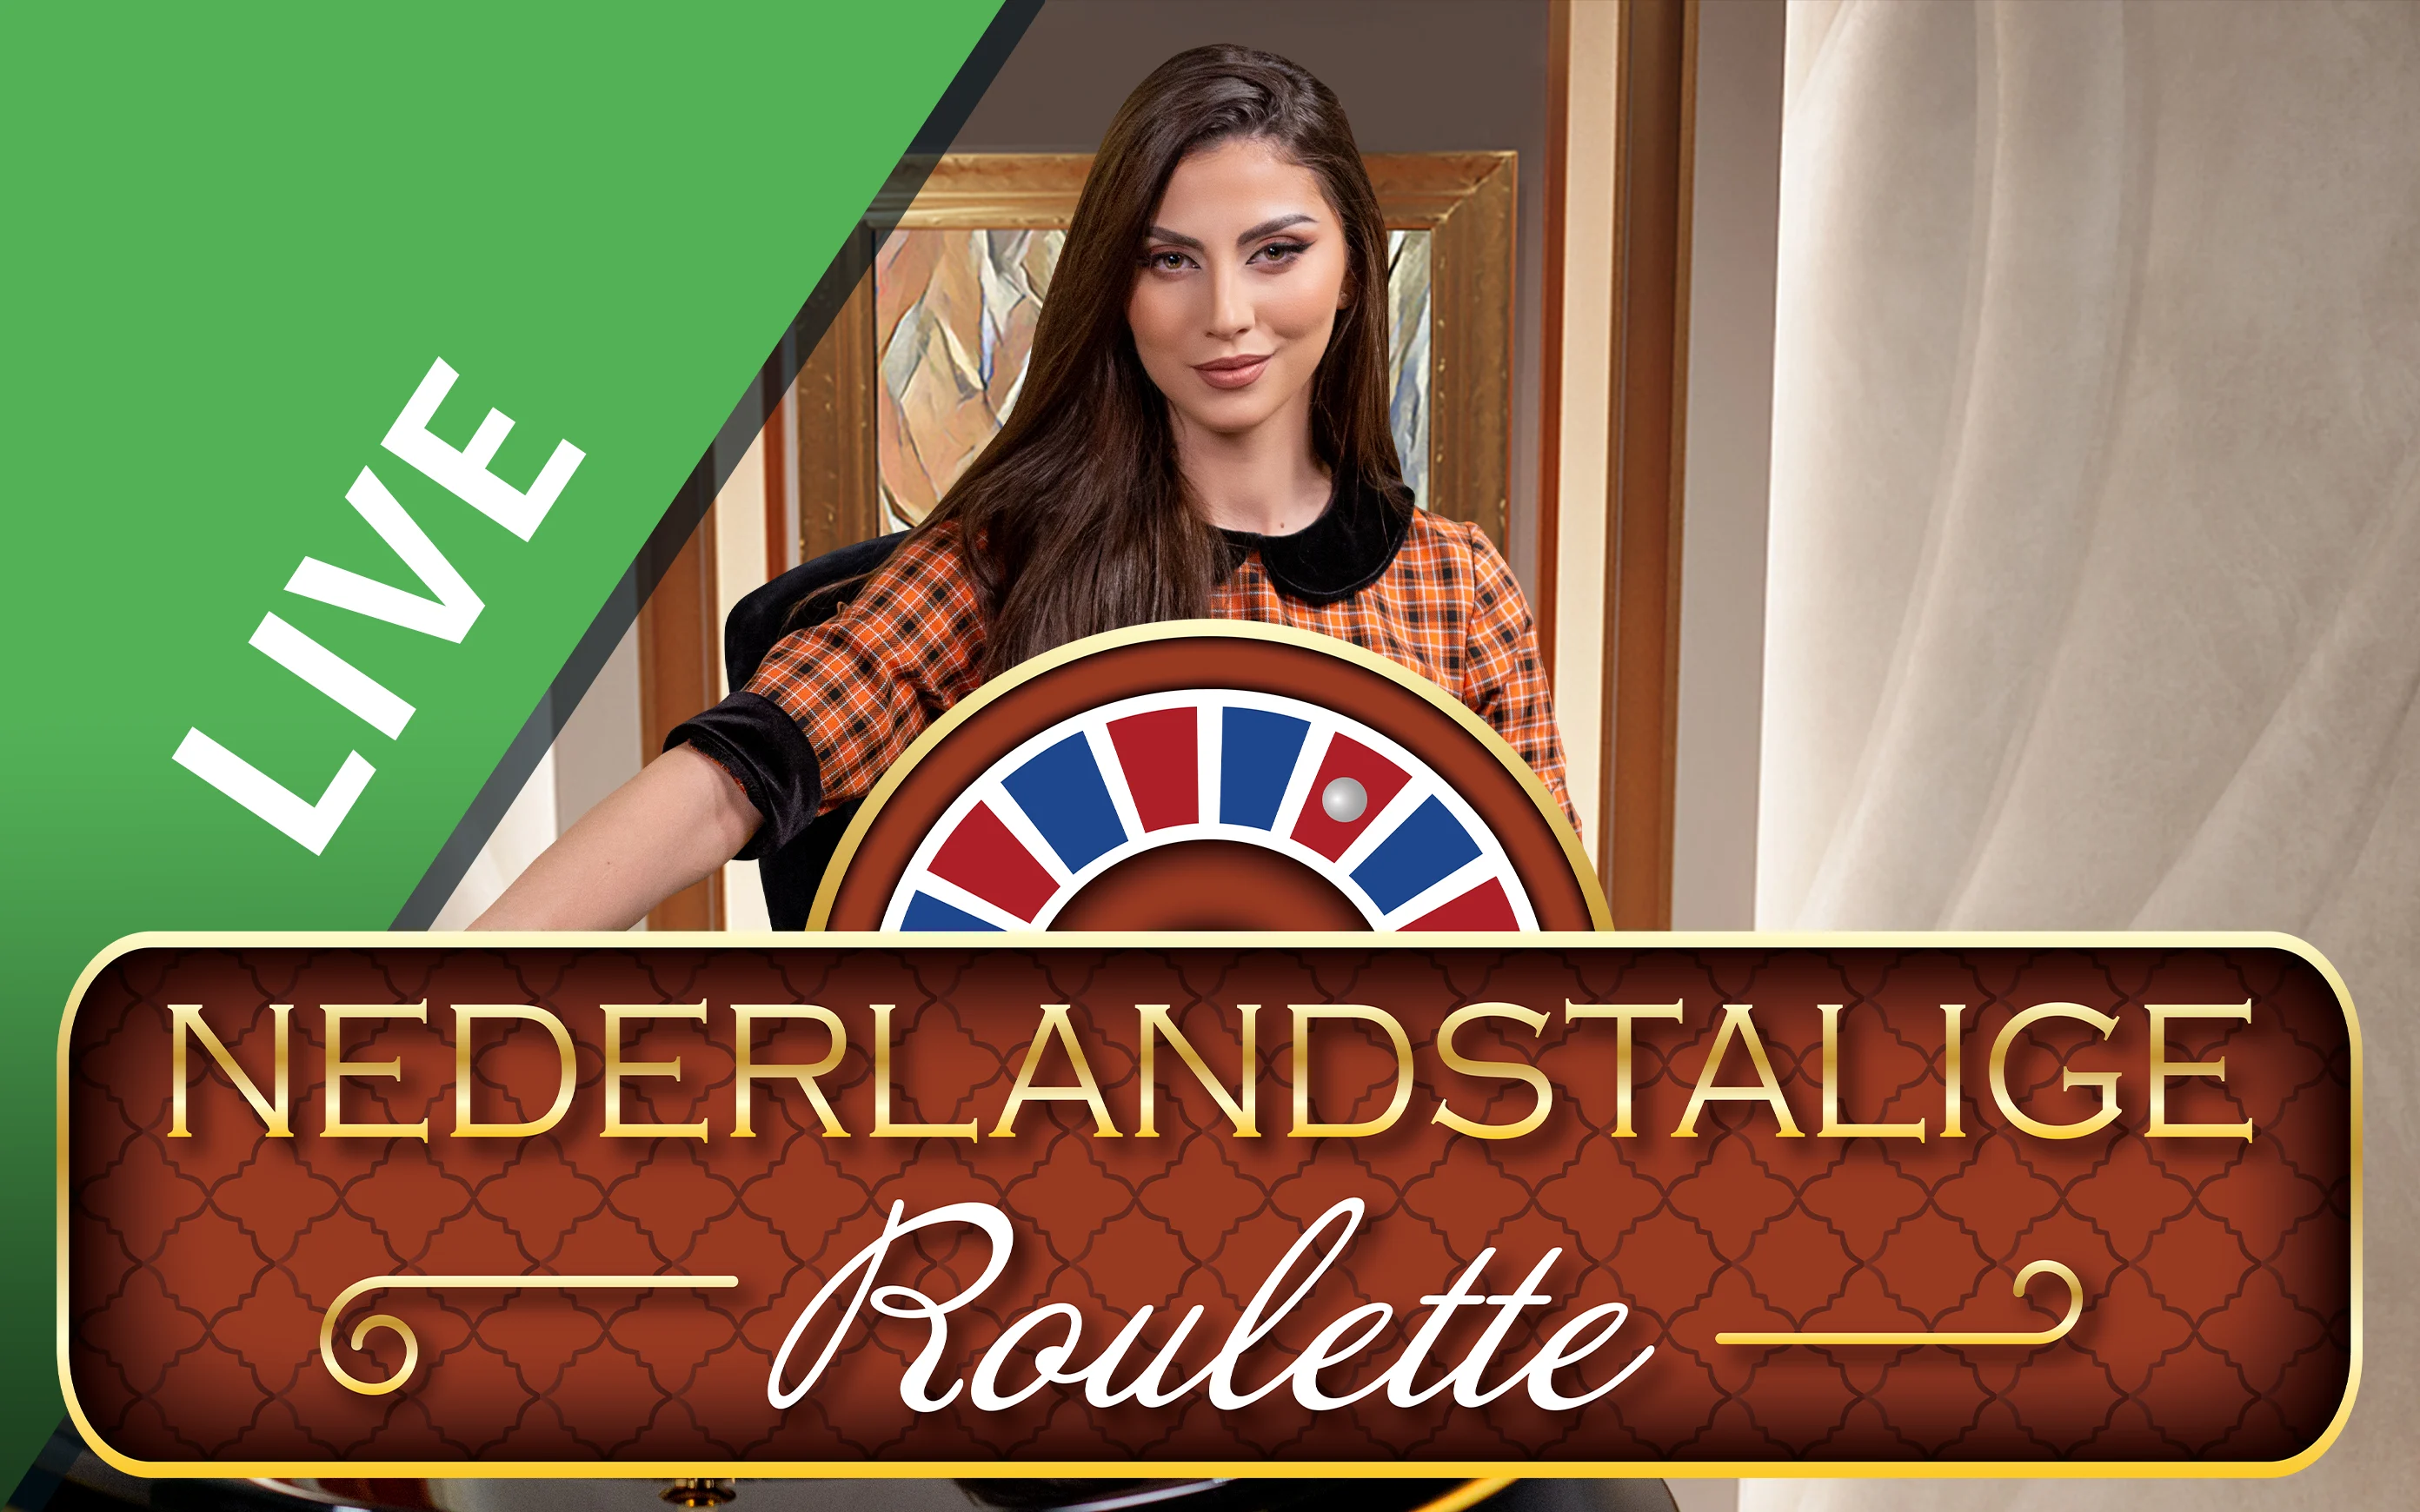 Грайте у Nederlandstalige Roulette в онлайн-казино Starcasino.be